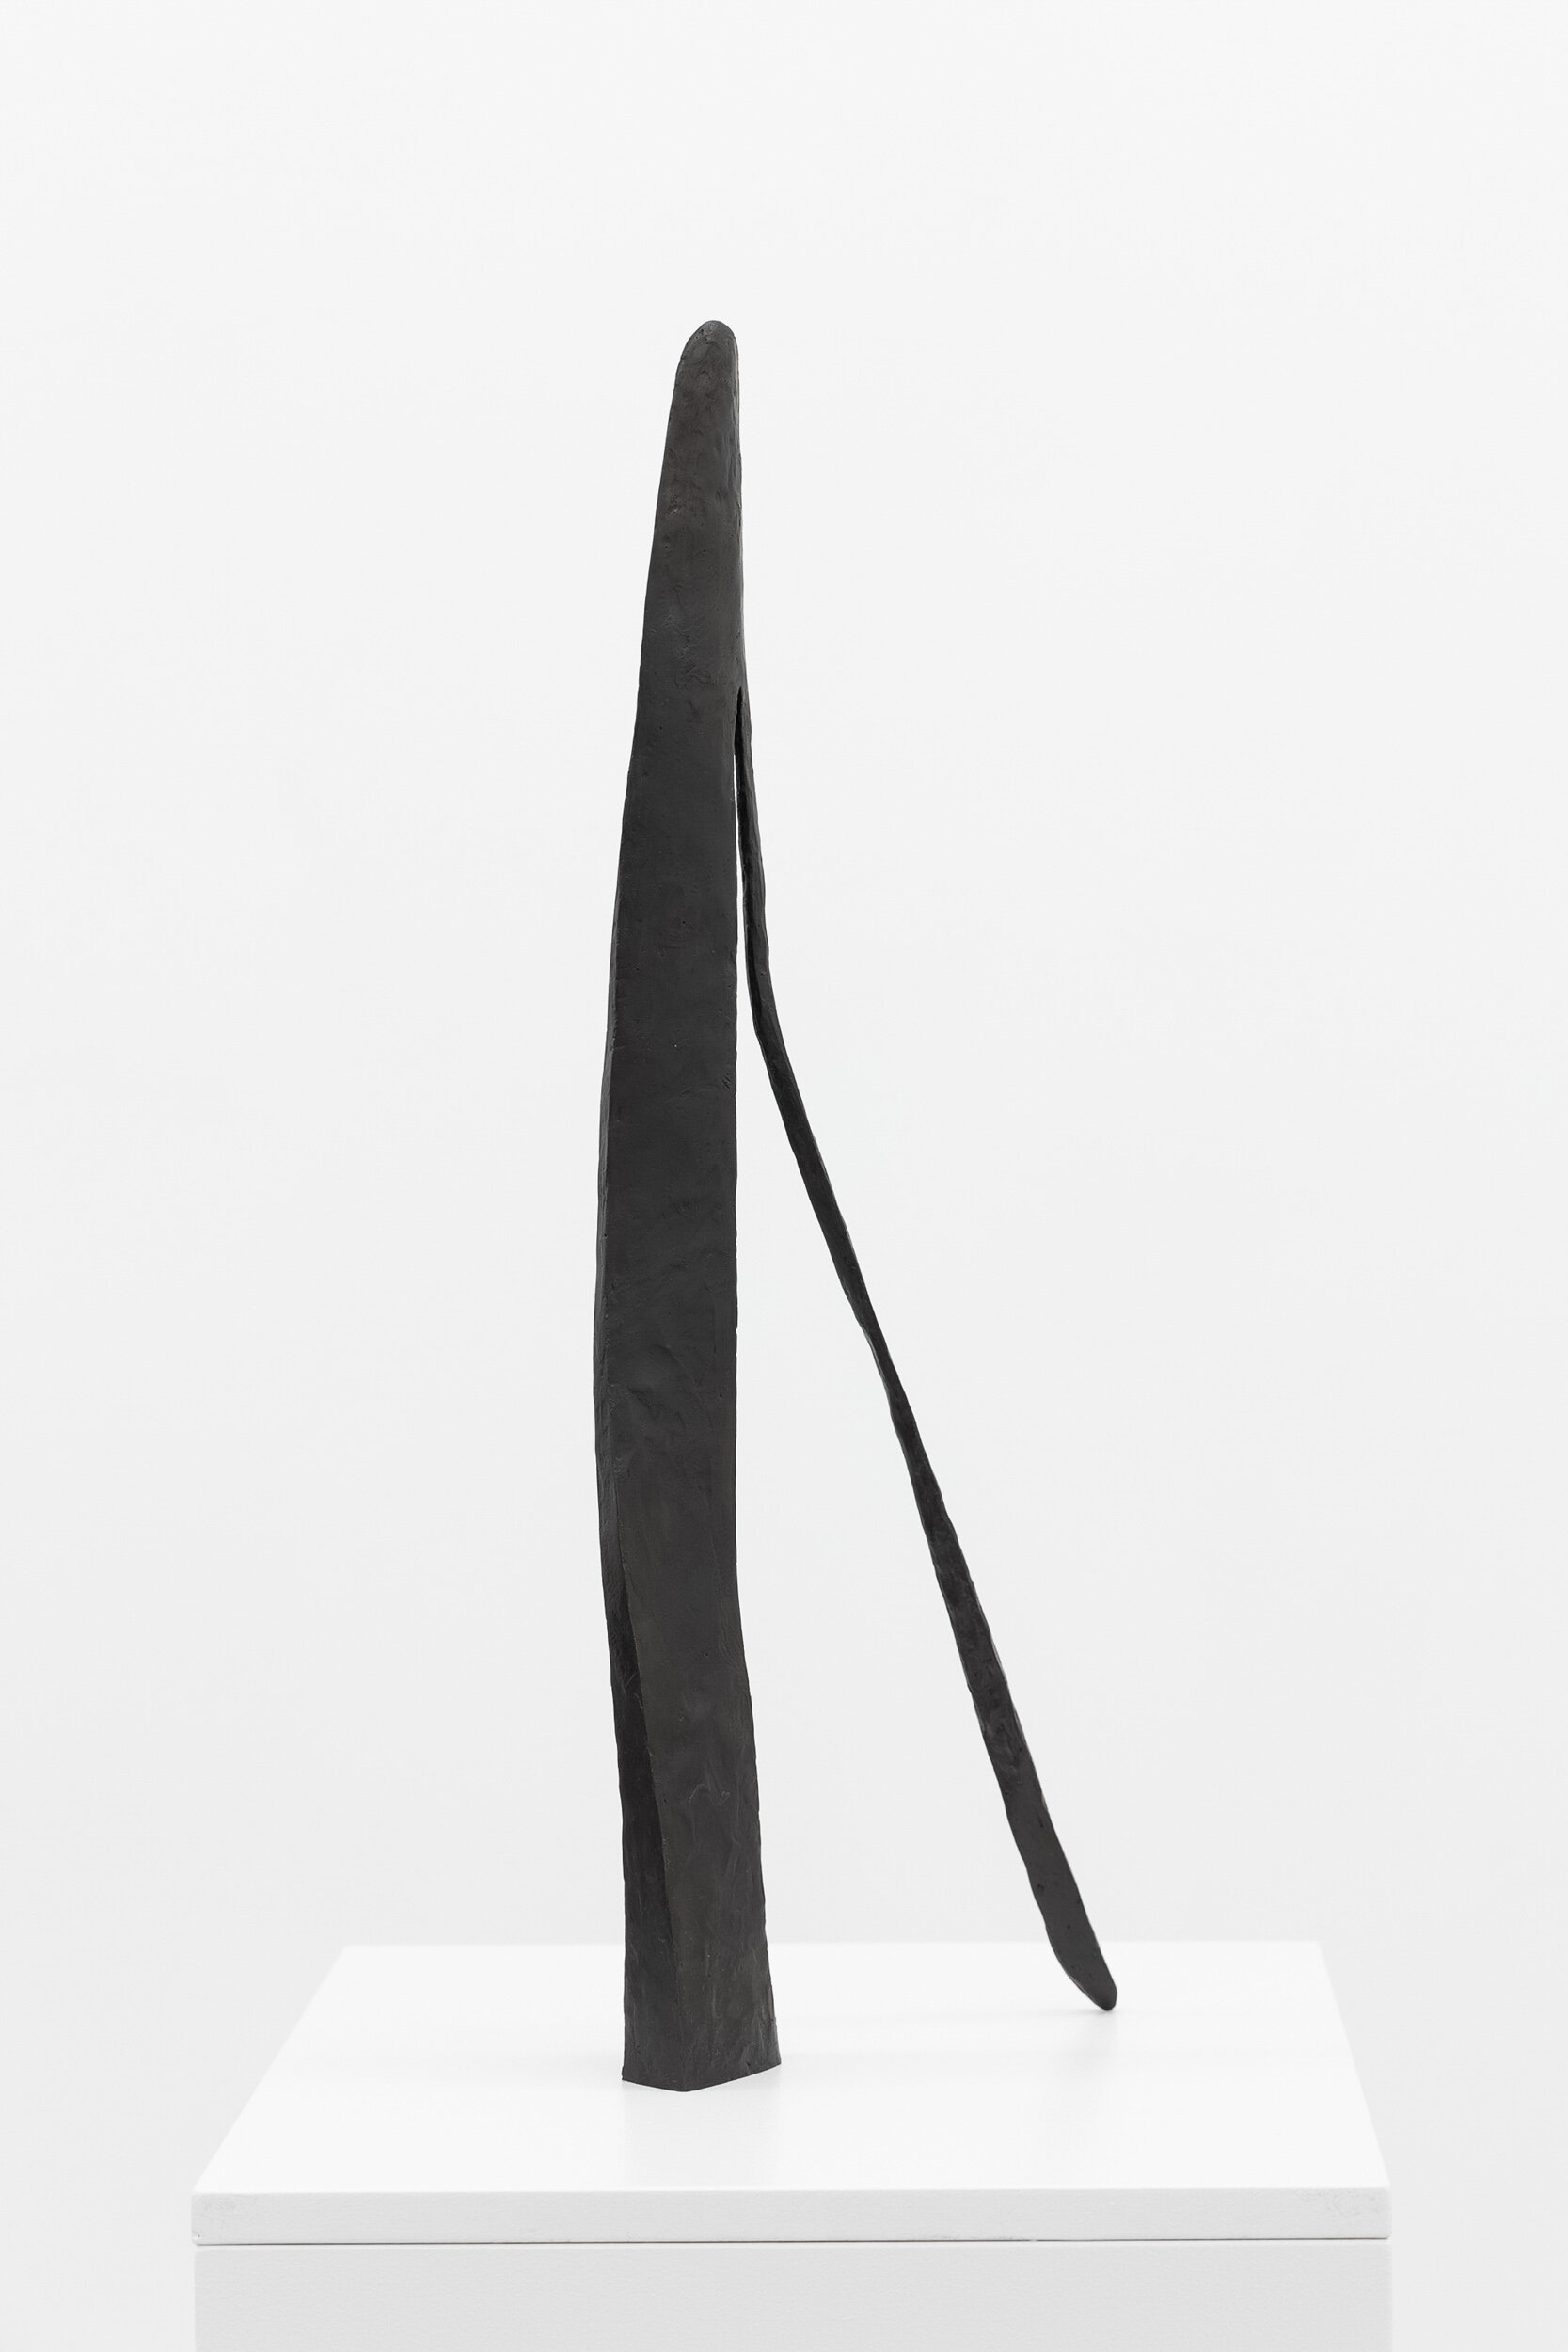  Sculpture II, 2019 (JG s 69). Patinated bronze. H 56 x W 18,7 x D 4,2 cm. Ed. 5 + 1 AP. Photo: Adrian Bugge 